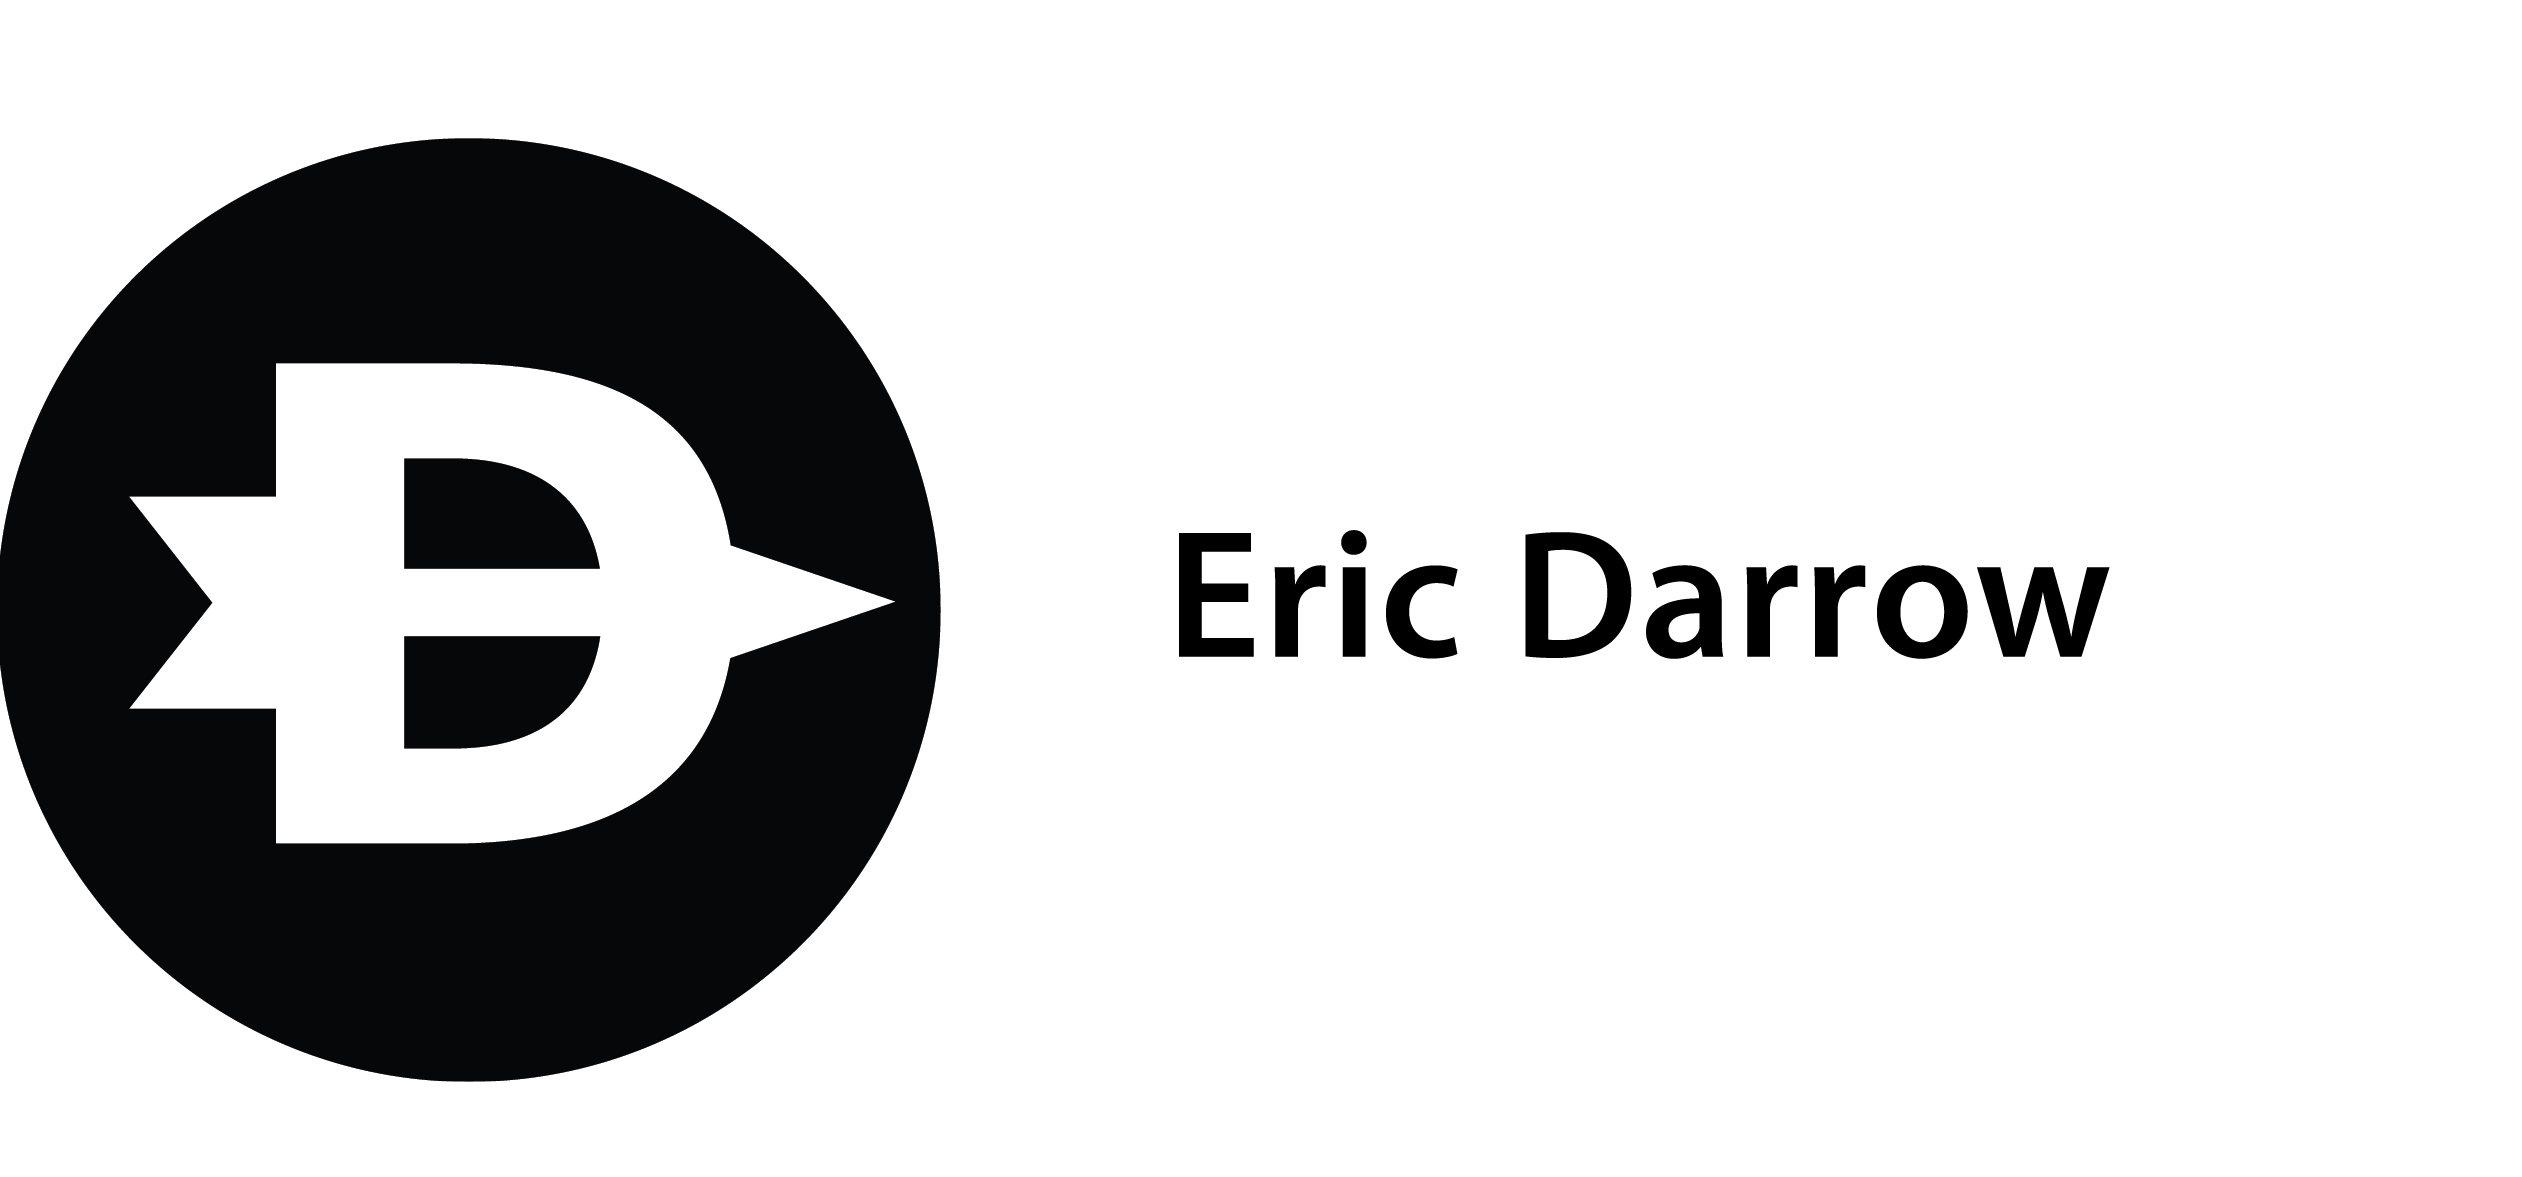 Eric Darrow